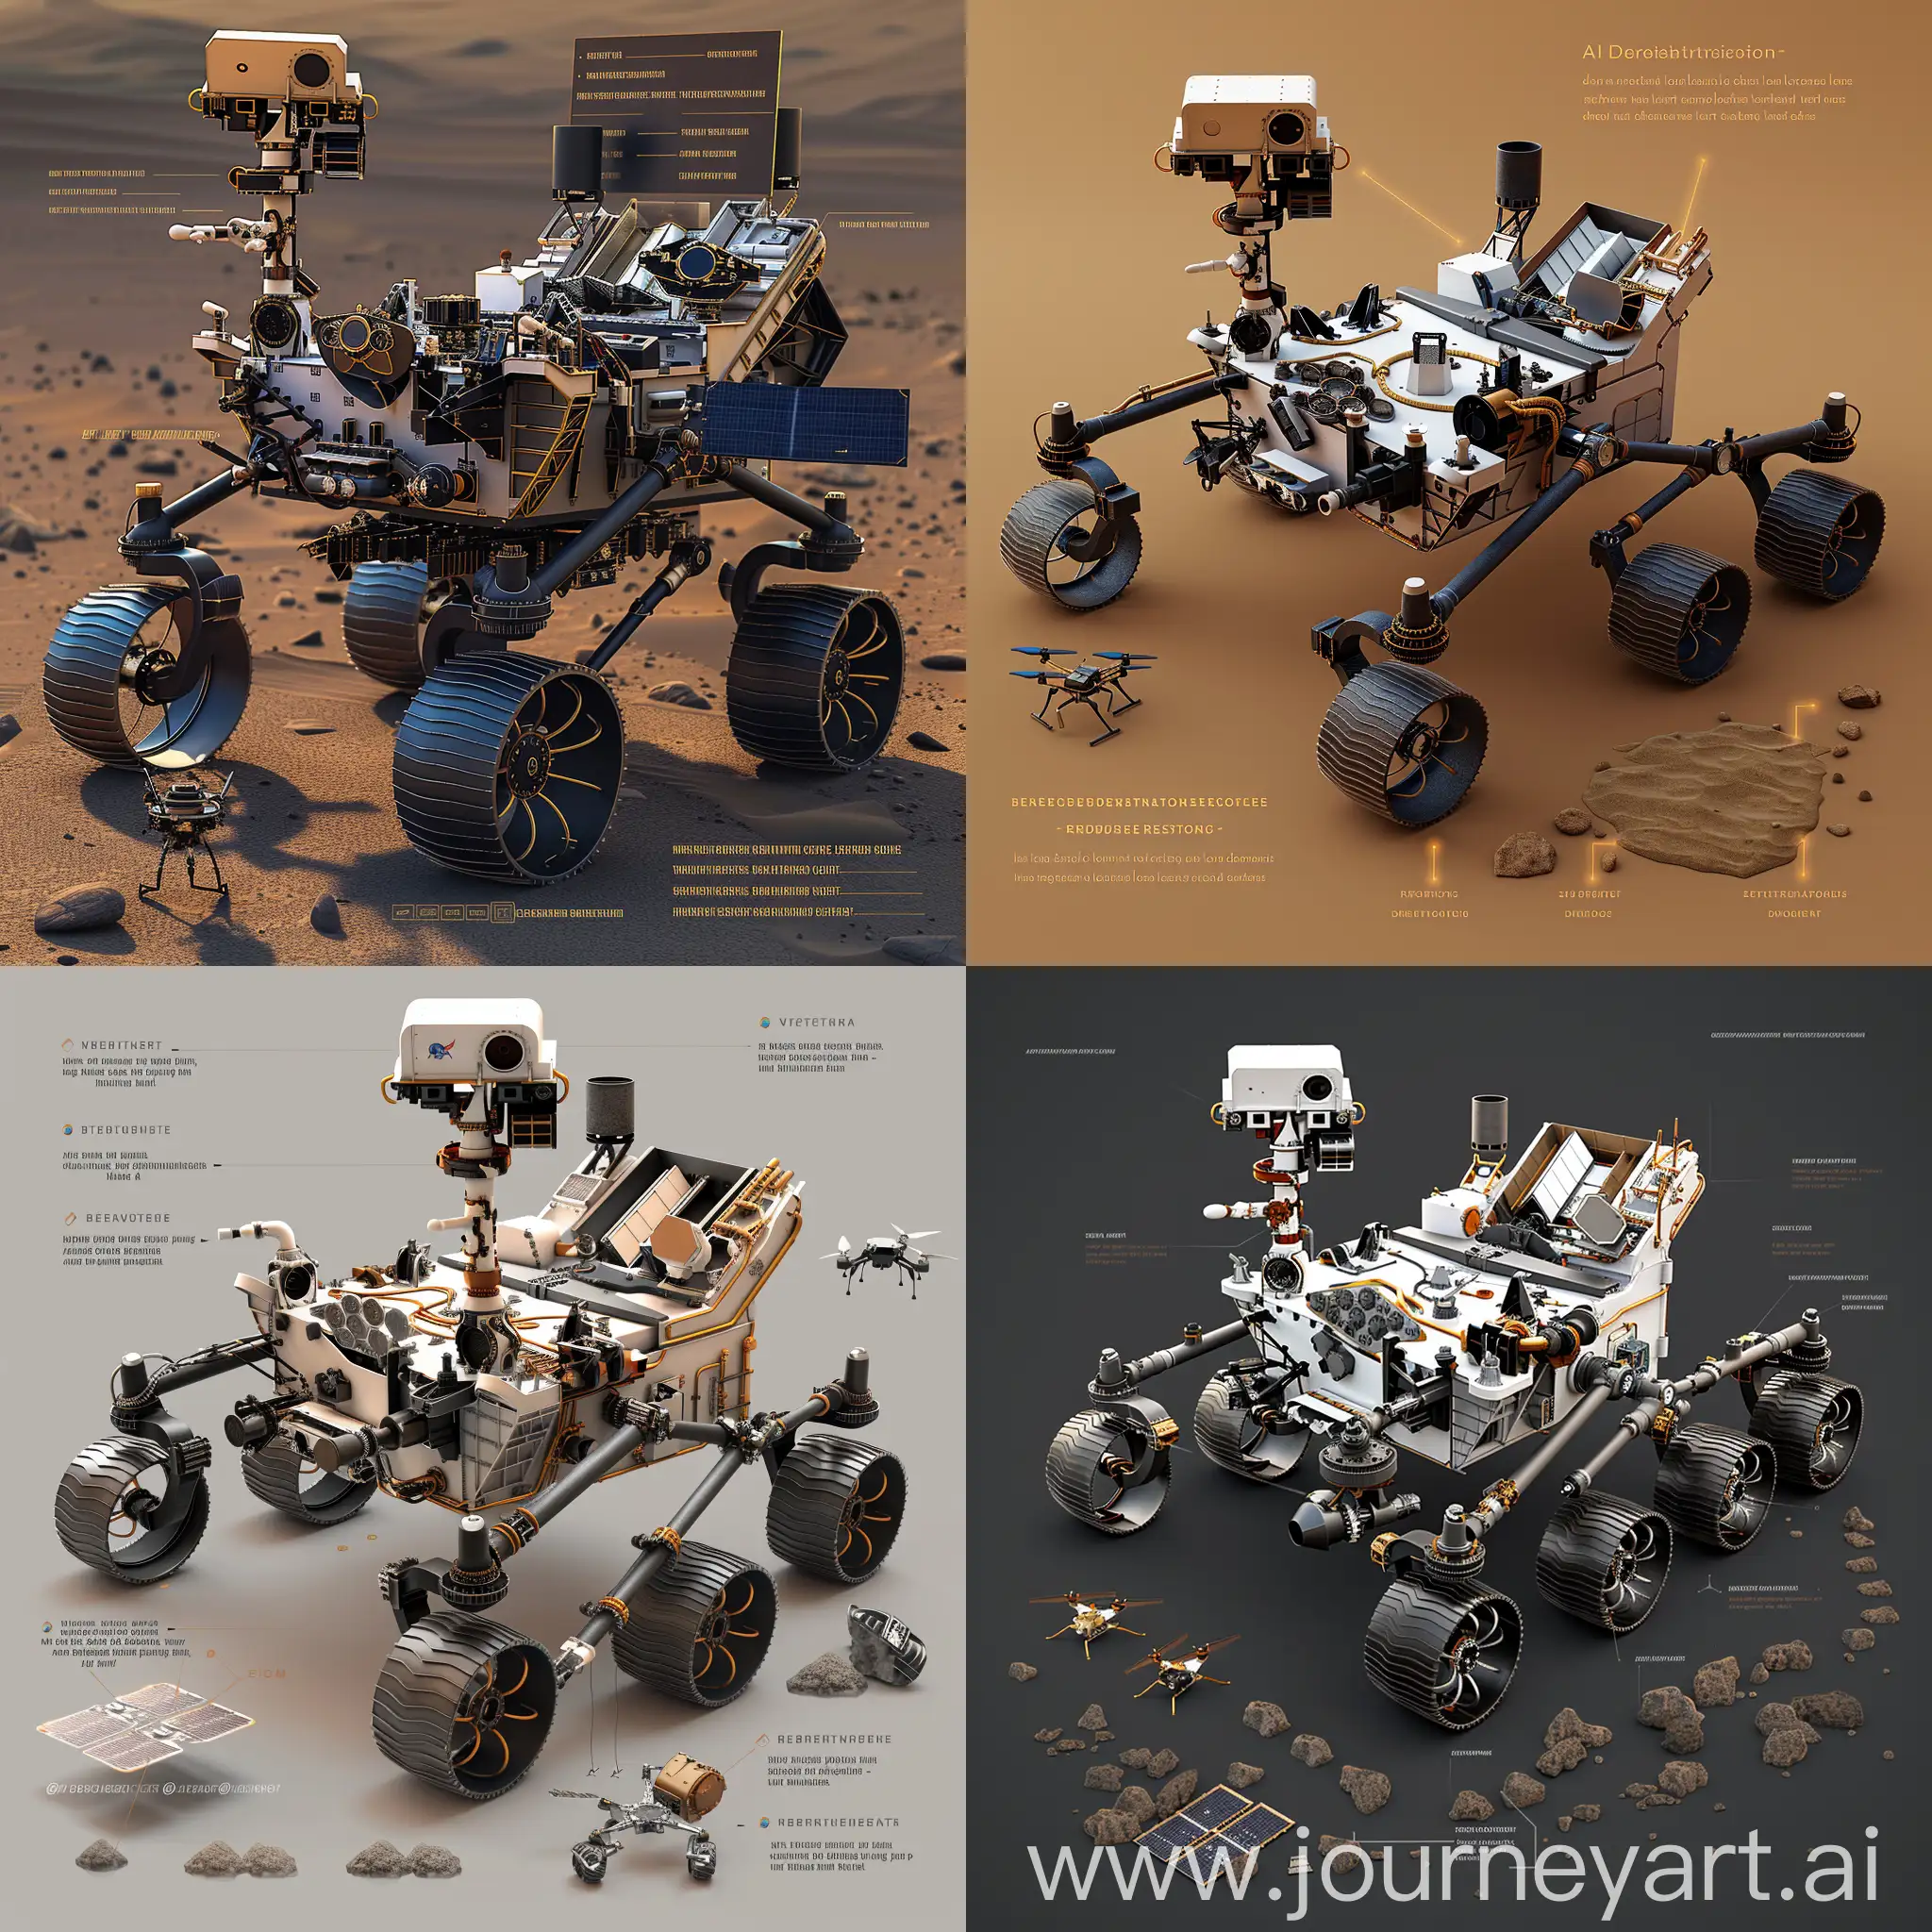 Advanced-Mars-Rover-Exploring-with-AI-Autonomy-and-Quantum-Computing